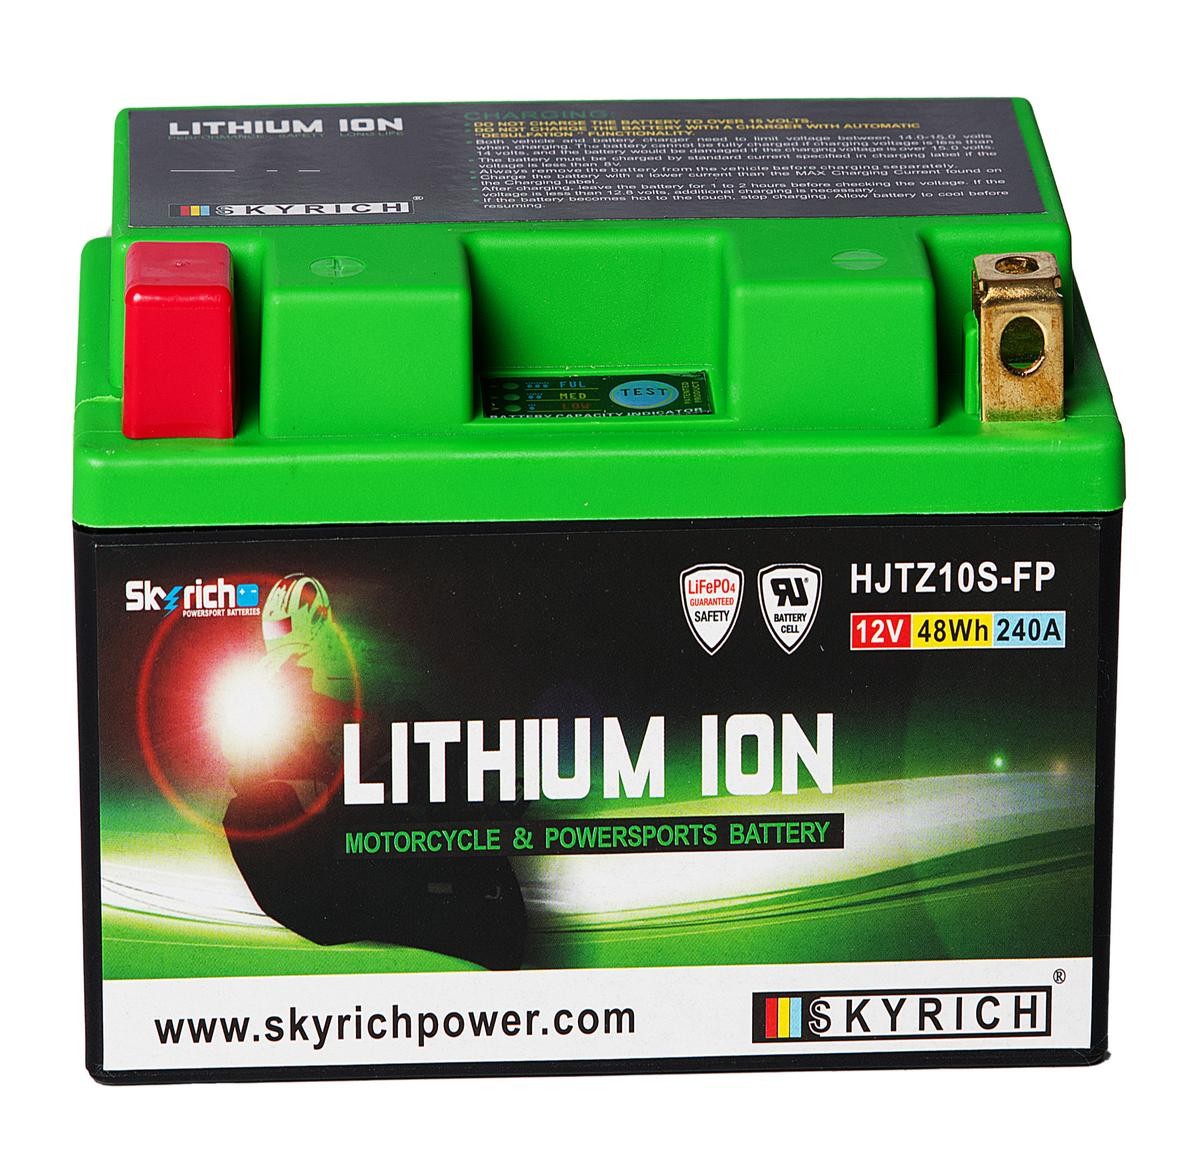 KTM SC Batterie 12V 4Ah 240A N Li-Ionen-Batterie SKYRICH LITHIUM ION HJTZ10S-FP